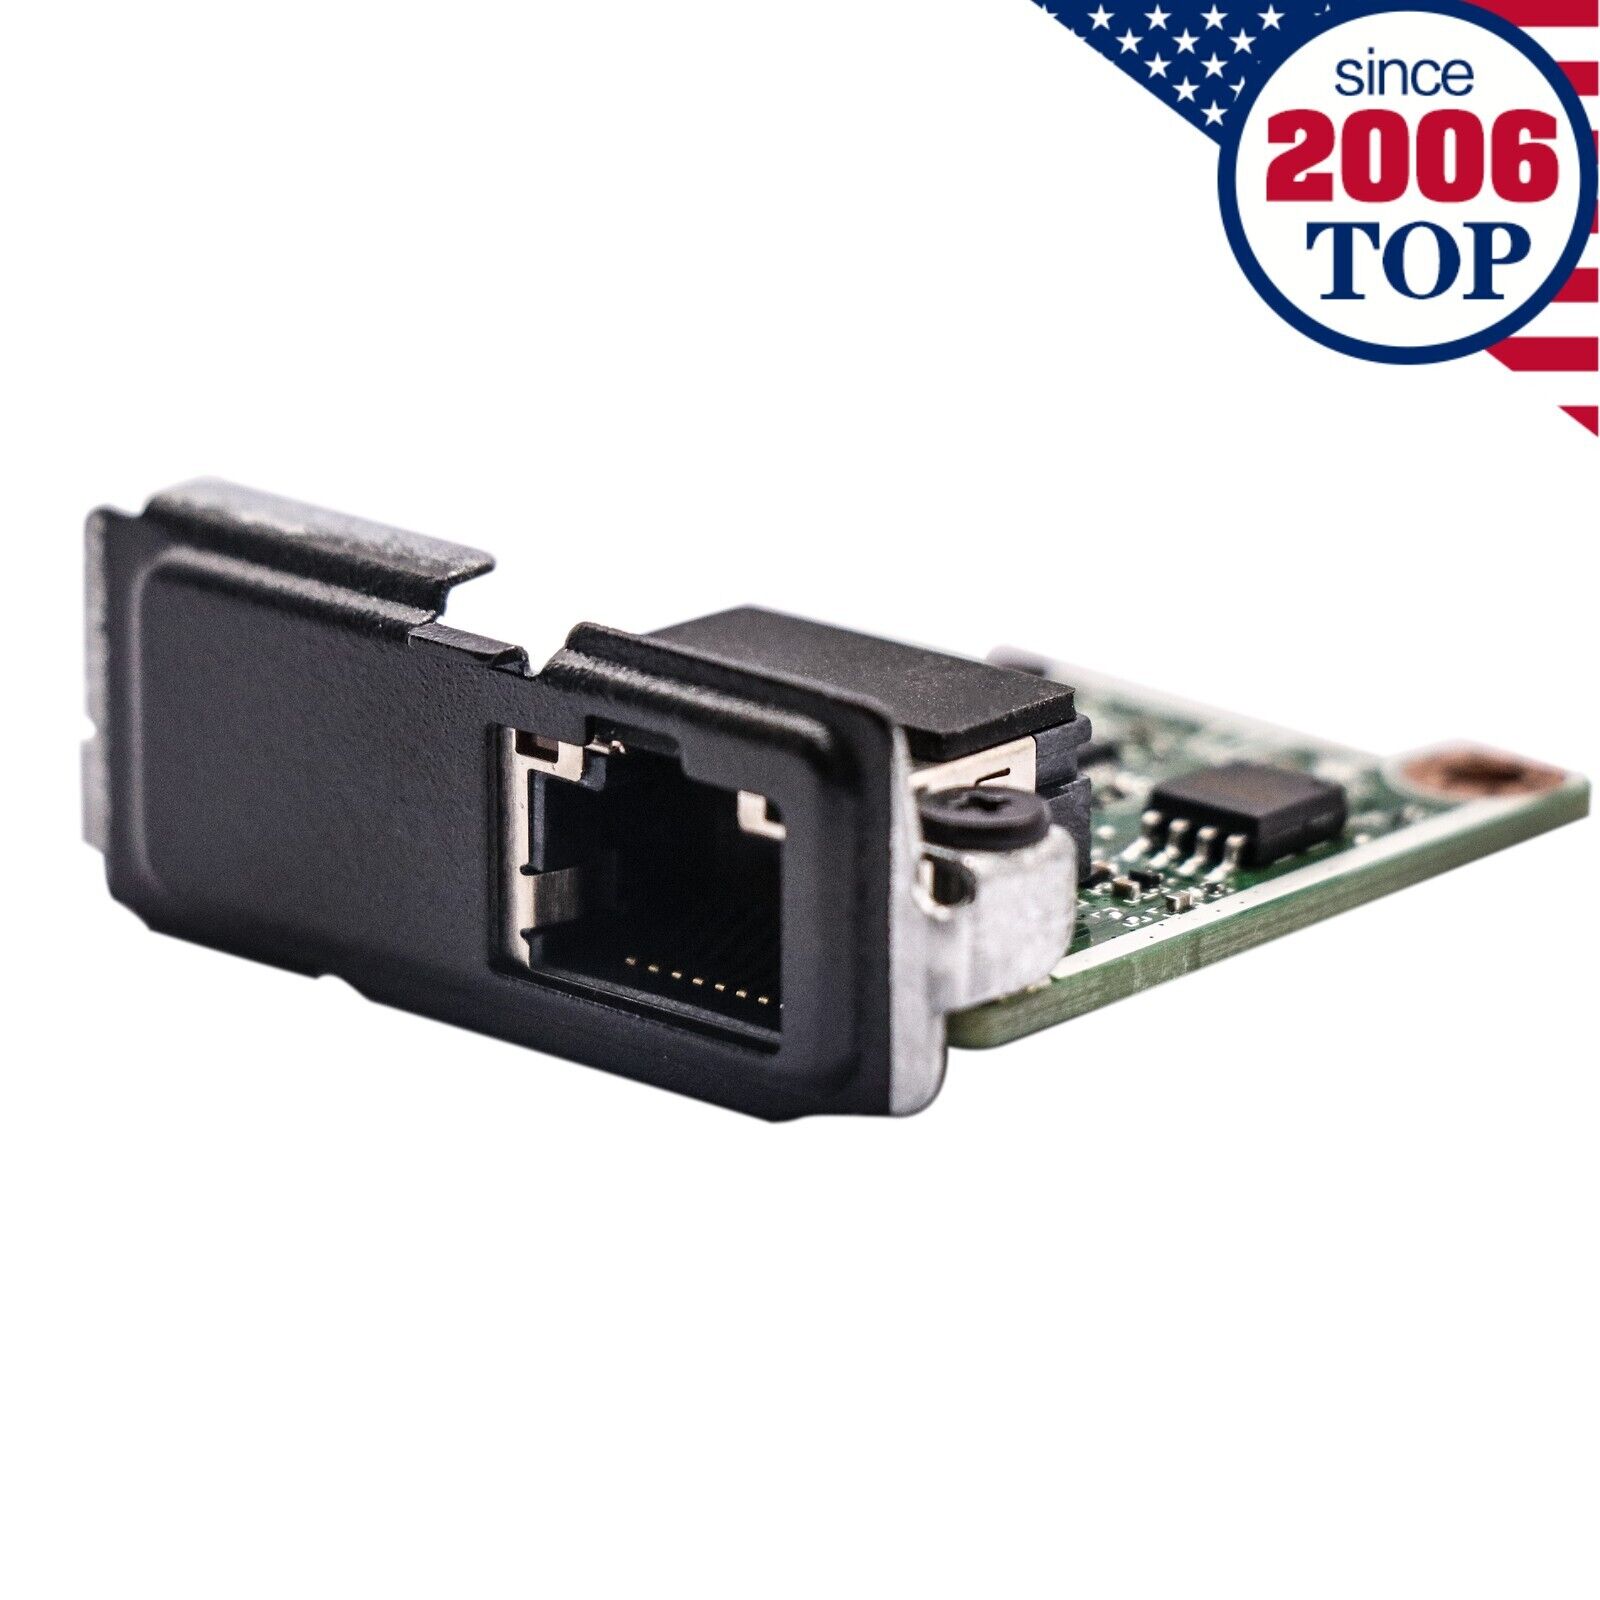 NEW Flex IO V2 2.5GbE NIC RJ45 Ethernet Option Card for HP L83414-001